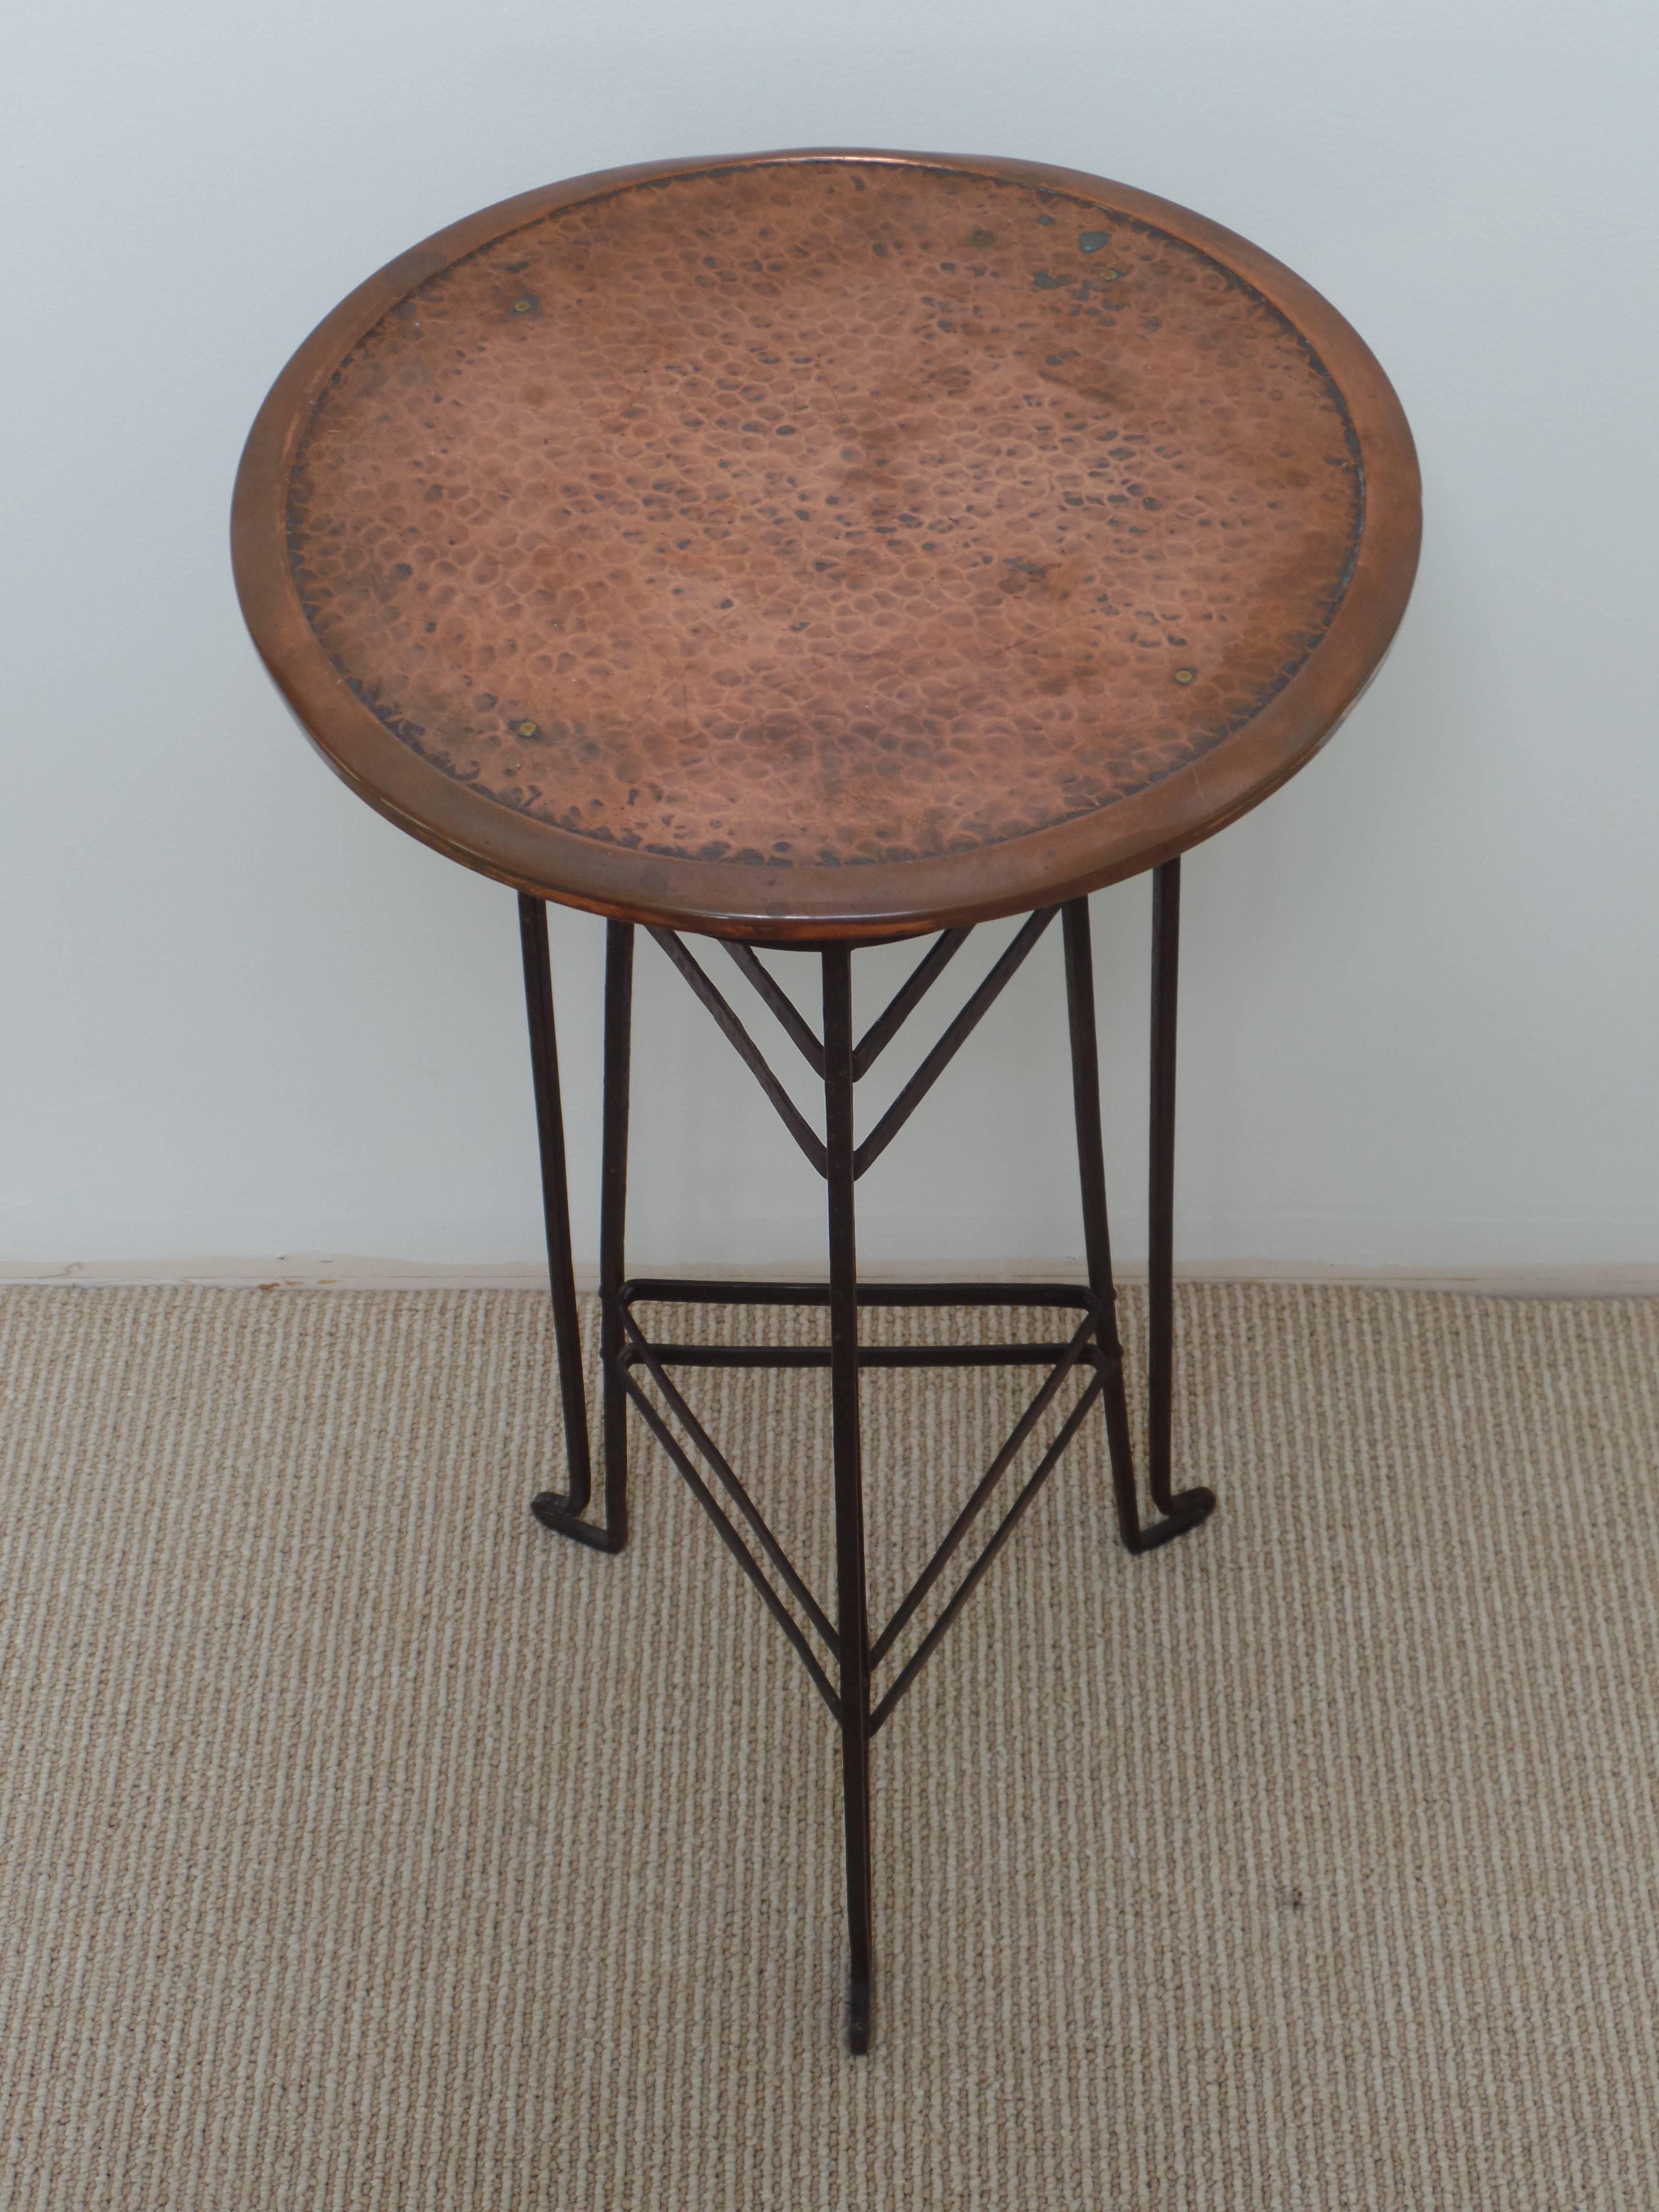 Art Nouveau Austrian Early Modern Copper and Steel Gueridon or Side Table